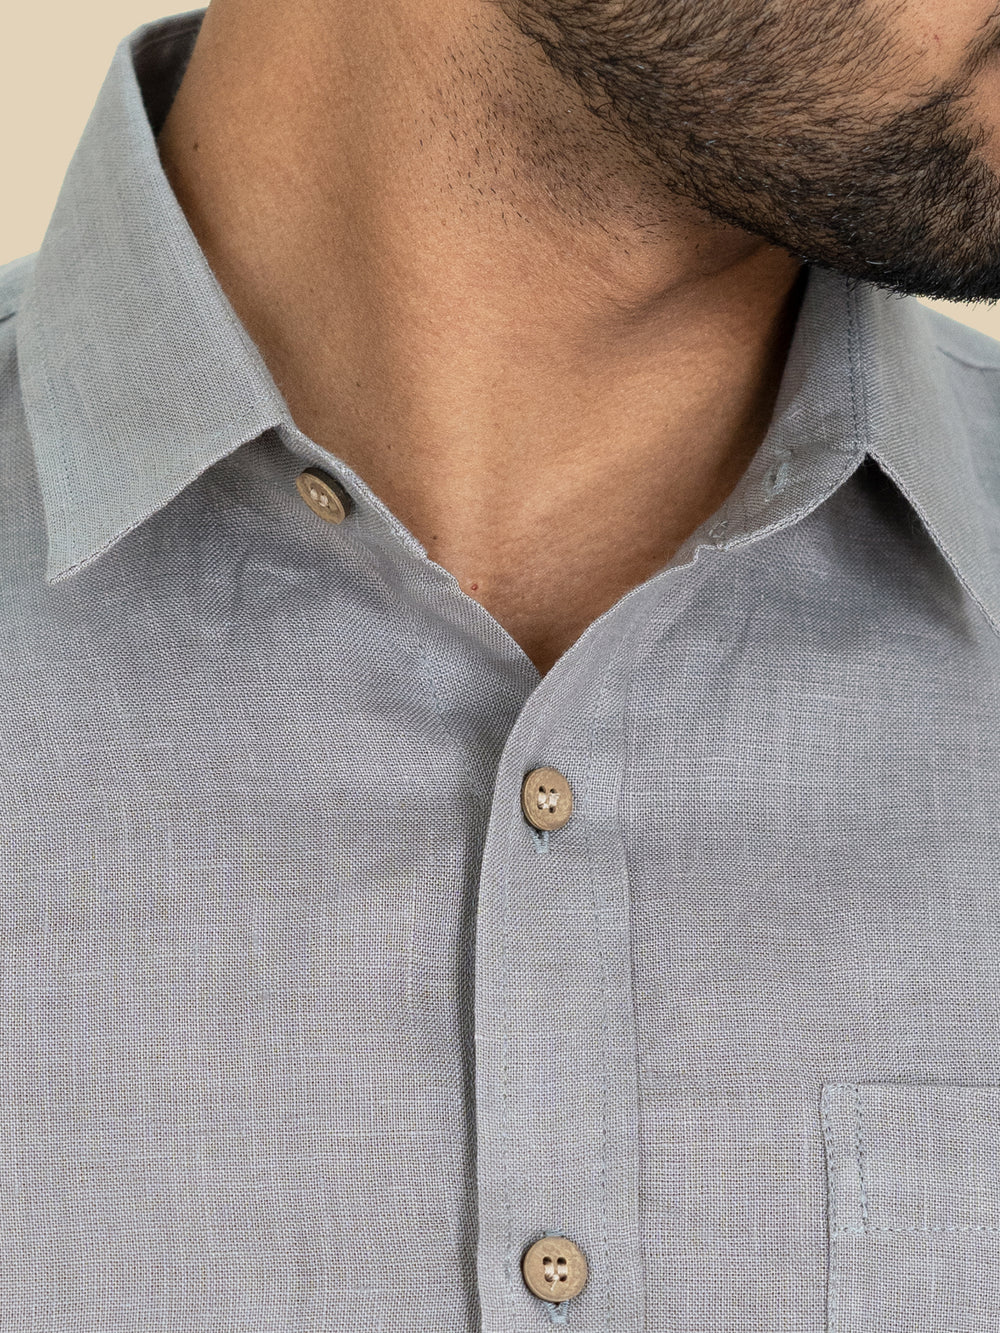 Harvey - Pure Linen Half Sleeve Shirt - Cement Grey